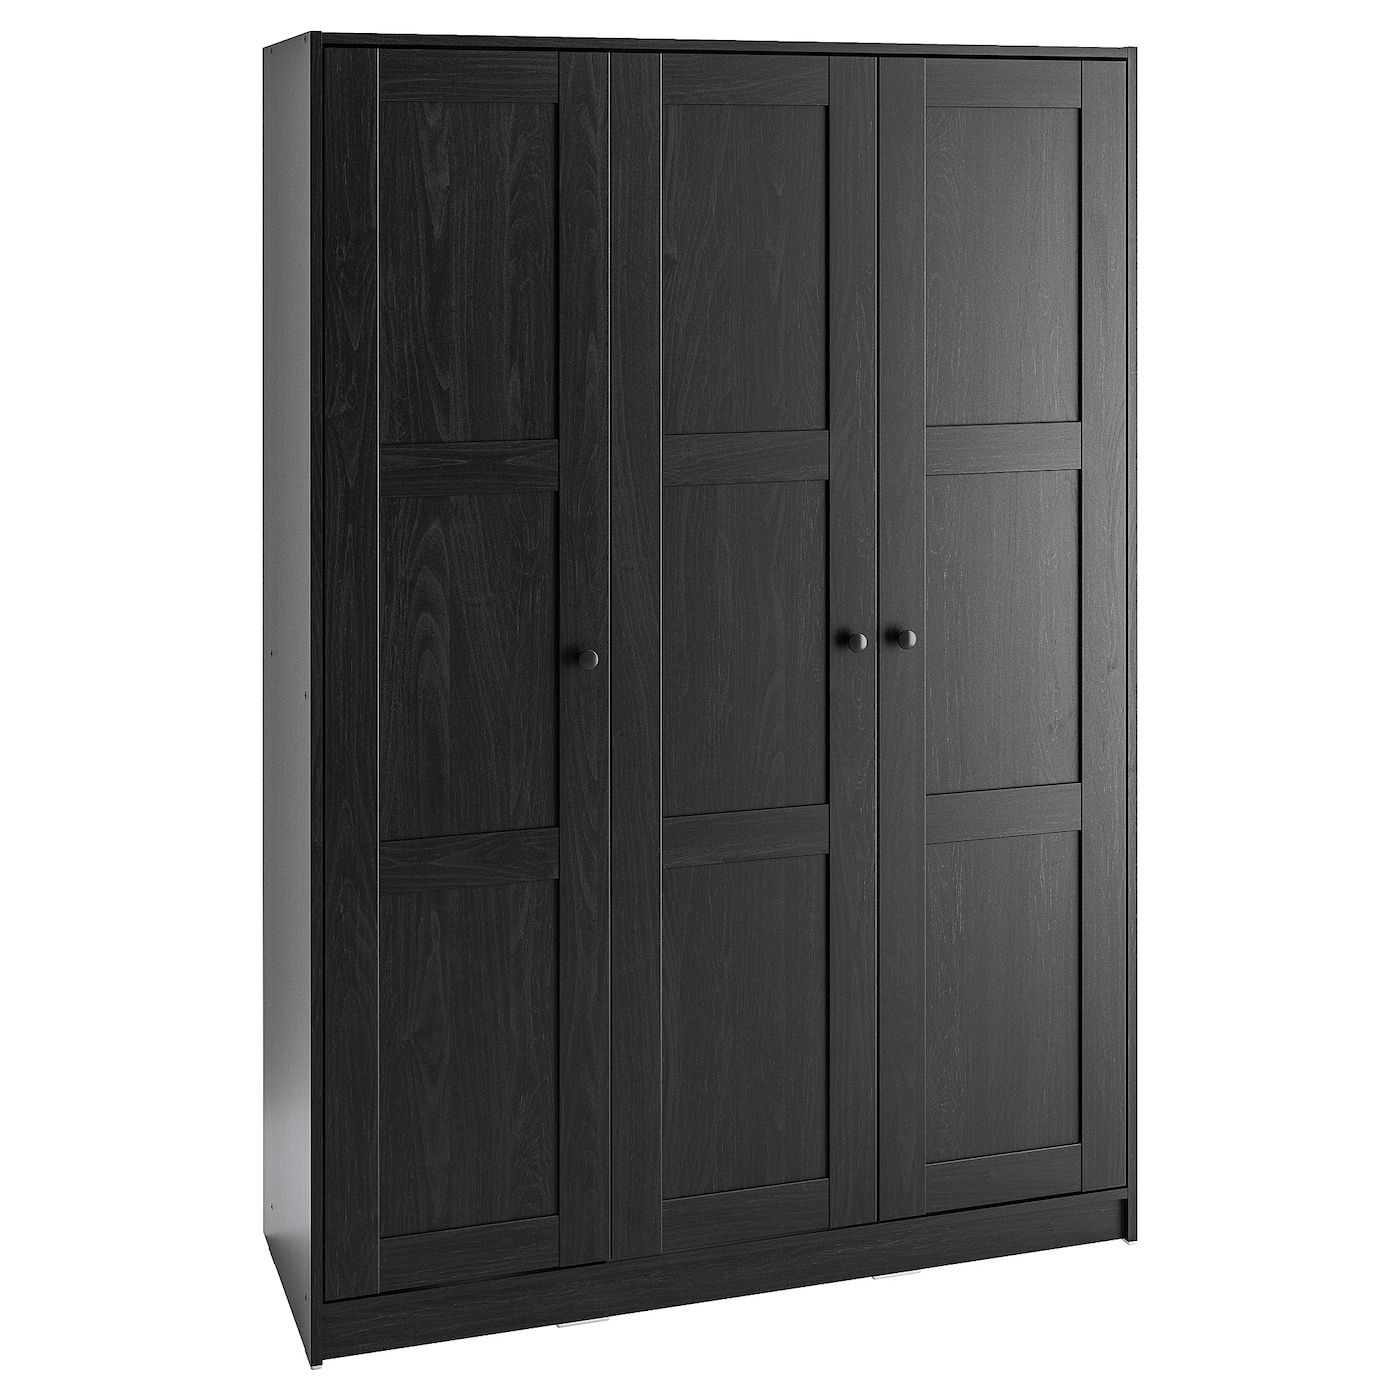 Rakkestad Wardrobe With 3 Doors, Black Brown, 461/8x691/4" – Ikea Within Black Wardrobes With Drawers (Gallery 3 of 20)